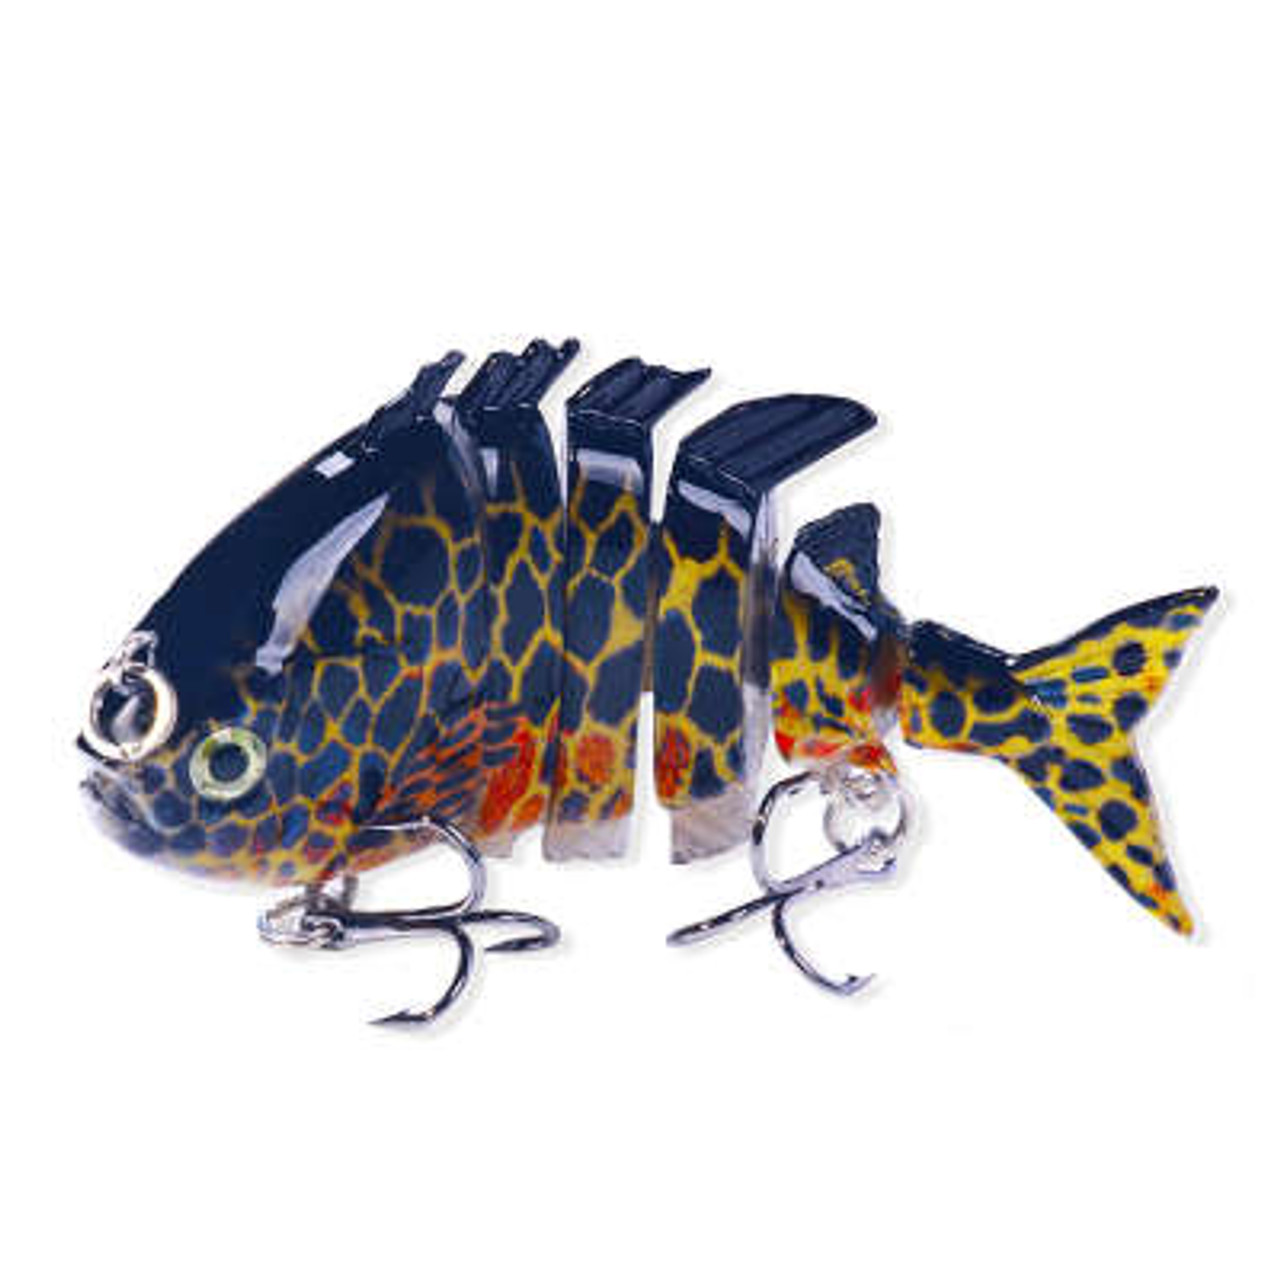 3 Bluegill Sunfish Swimbaits 6 Segments 3 colors to choose.